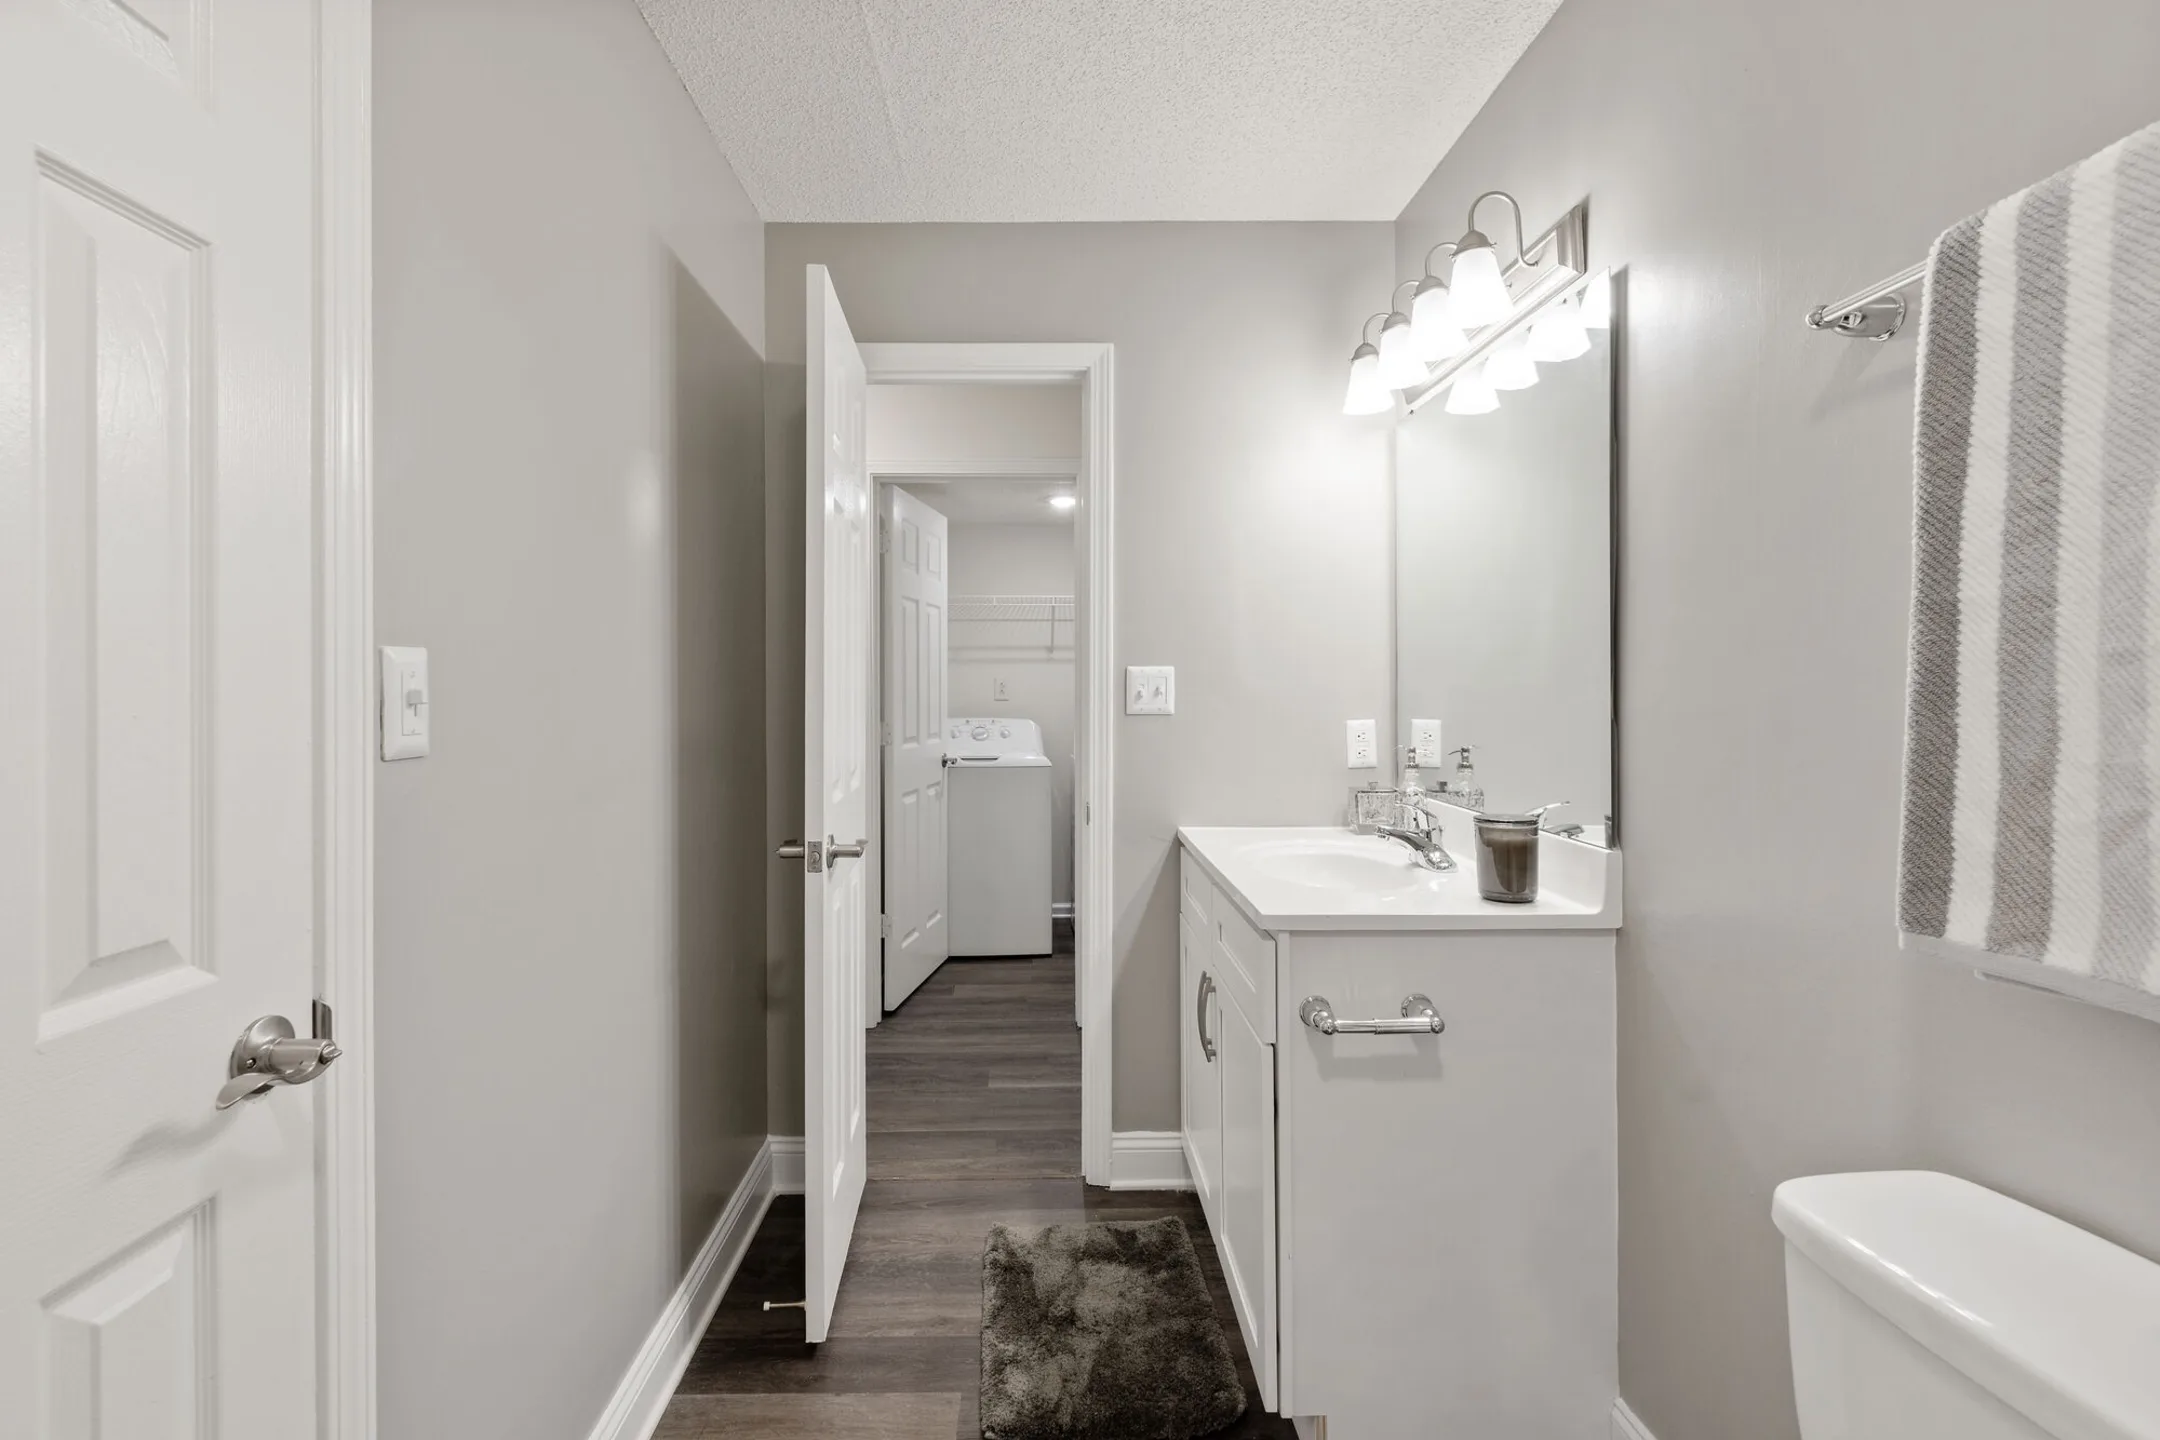 Bathroom - Biscayne Apartment Homes - Charlotte, NC